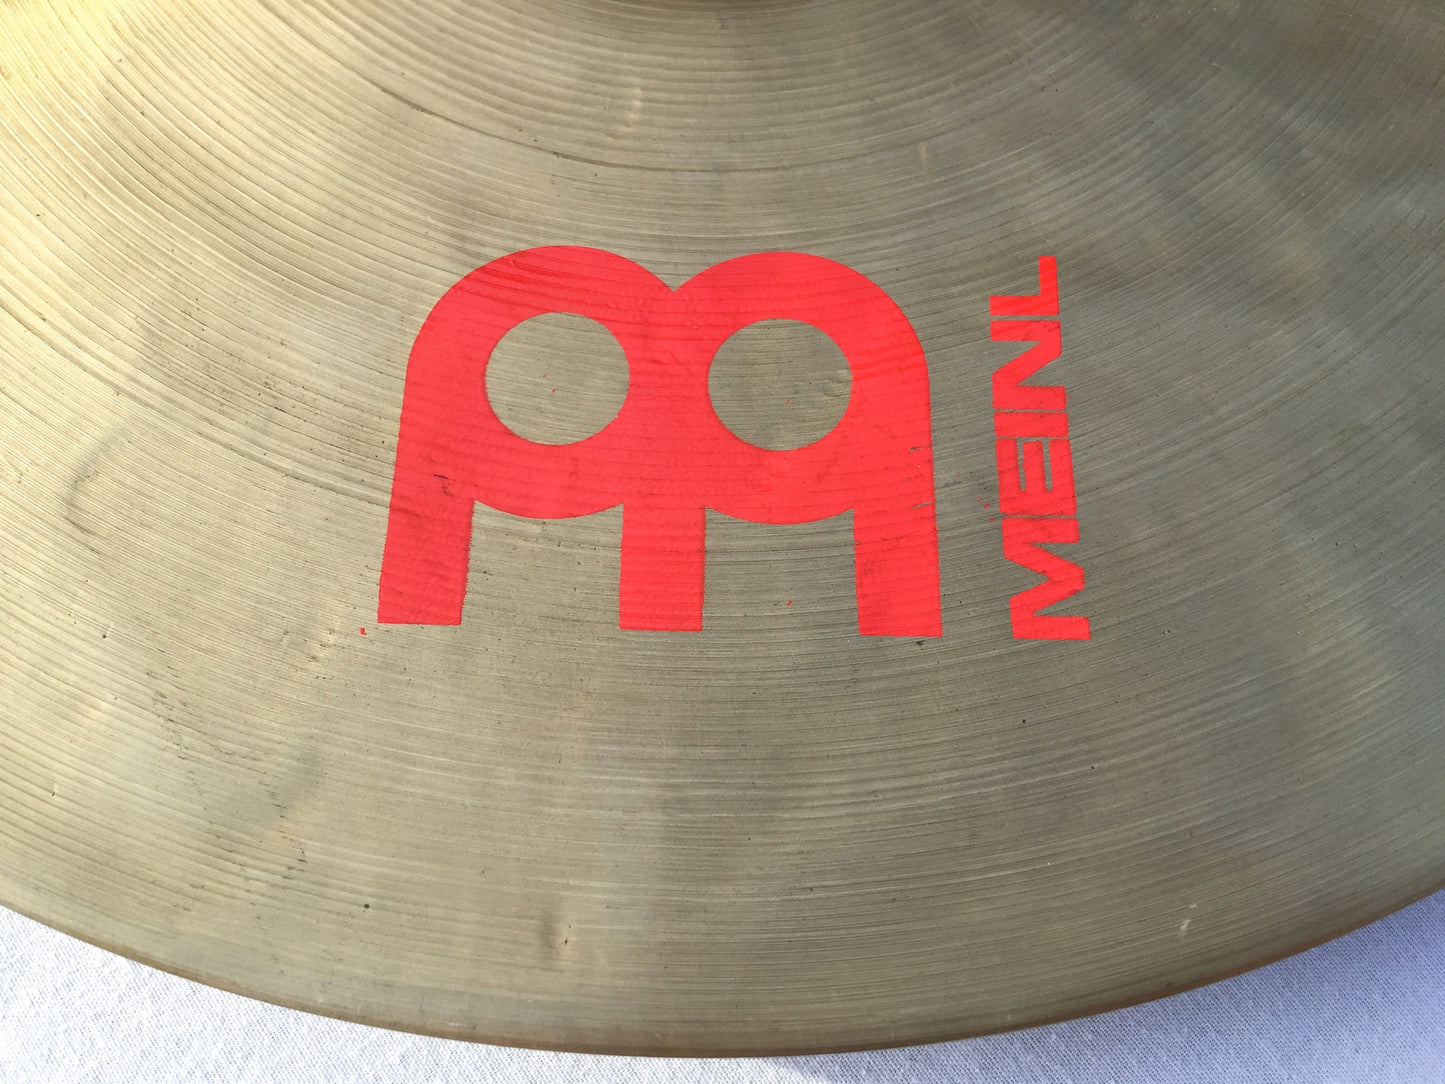 15" Meinl Dragon Profile Crash Cymbal 1396g - Inventory # 248